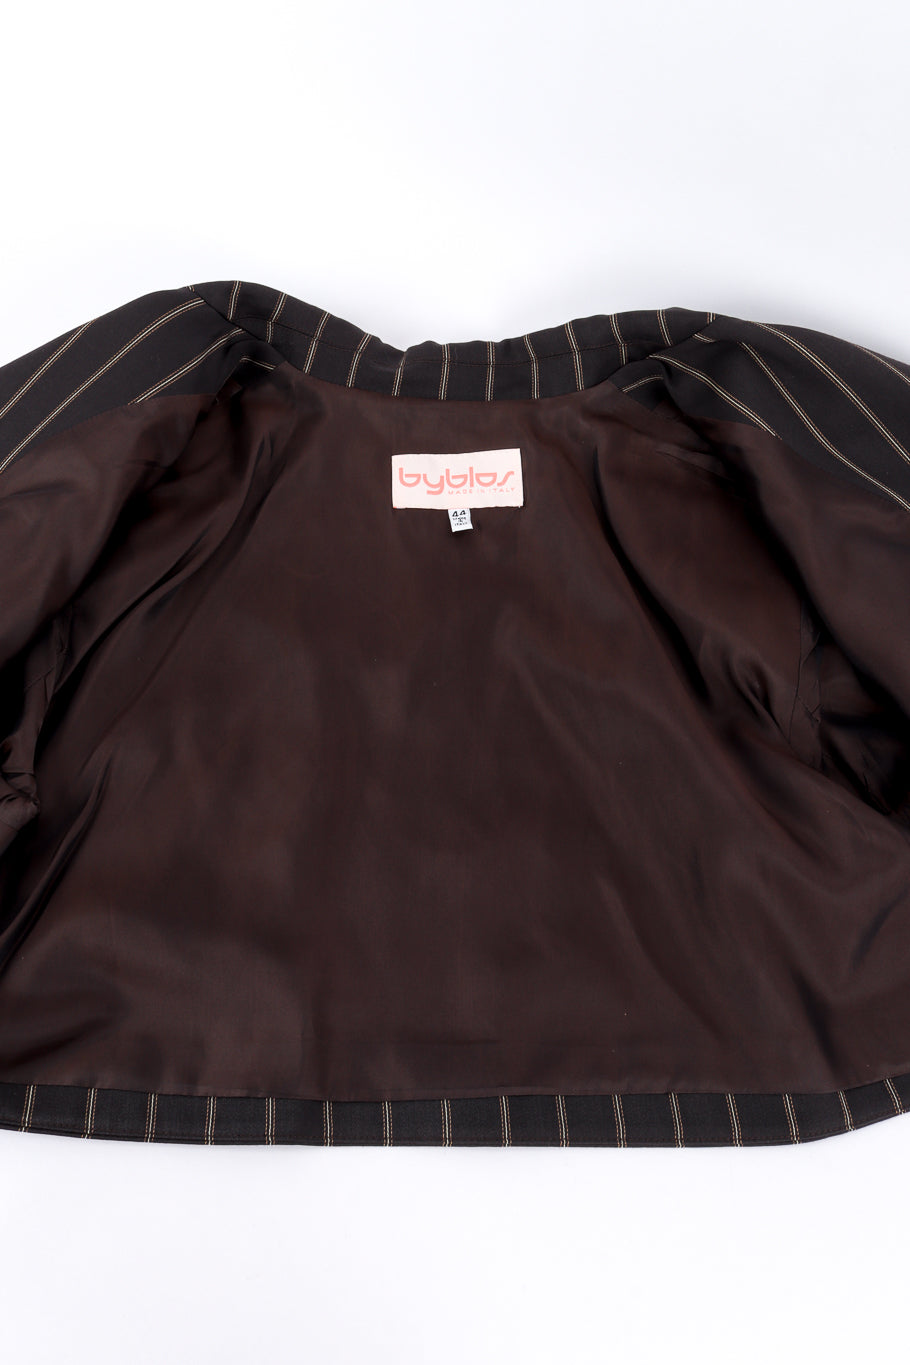 Vintage Byblos Cropped Pinstripe Jacket view of lining @recess la